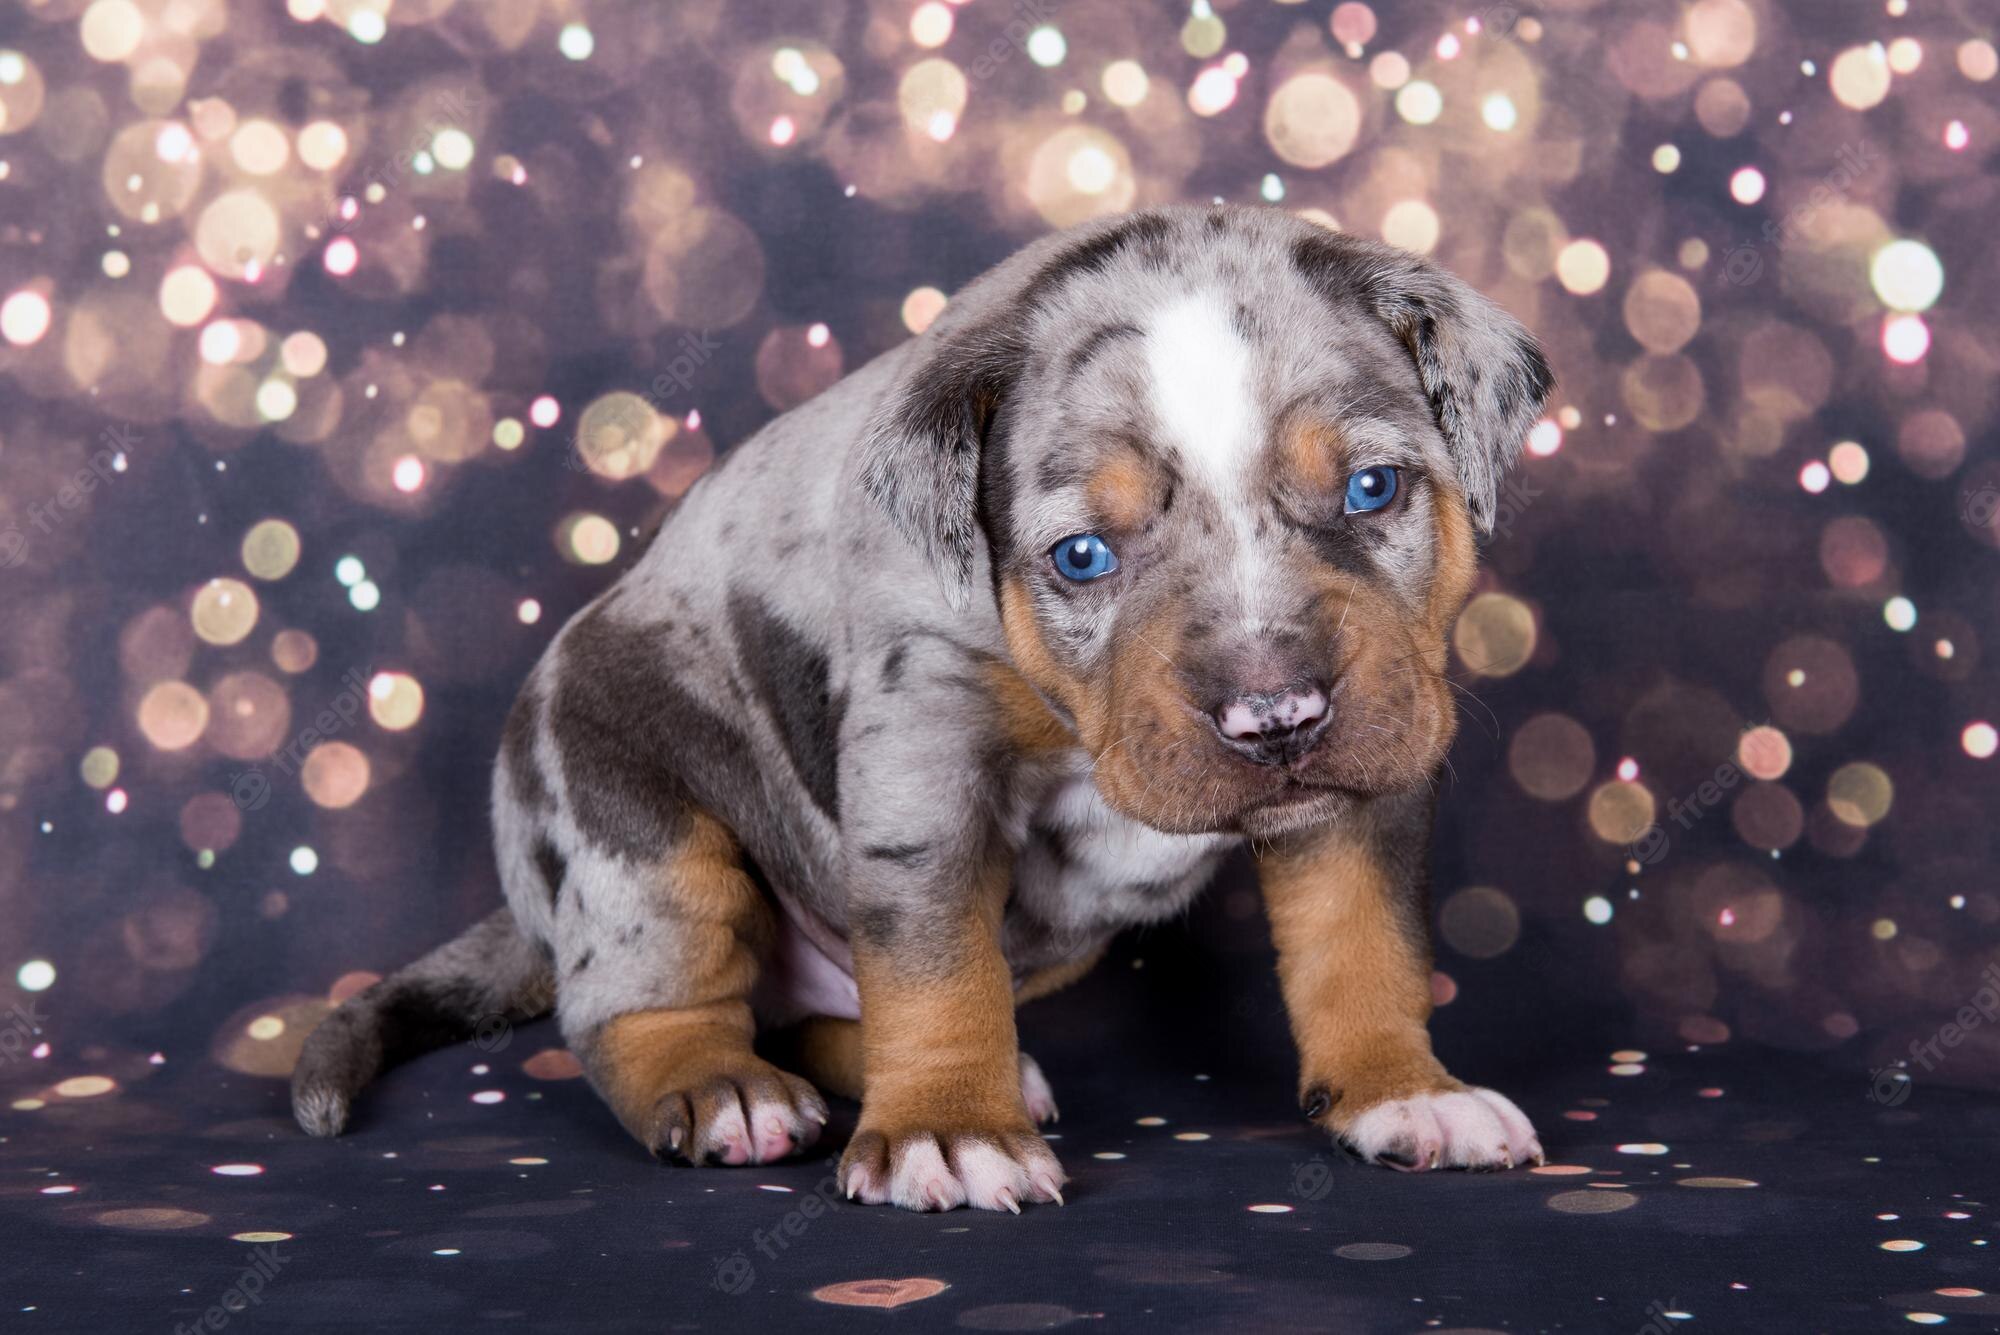 Premium Photo. Louisiana catahoula leopard dog puppy portrait on holiday background